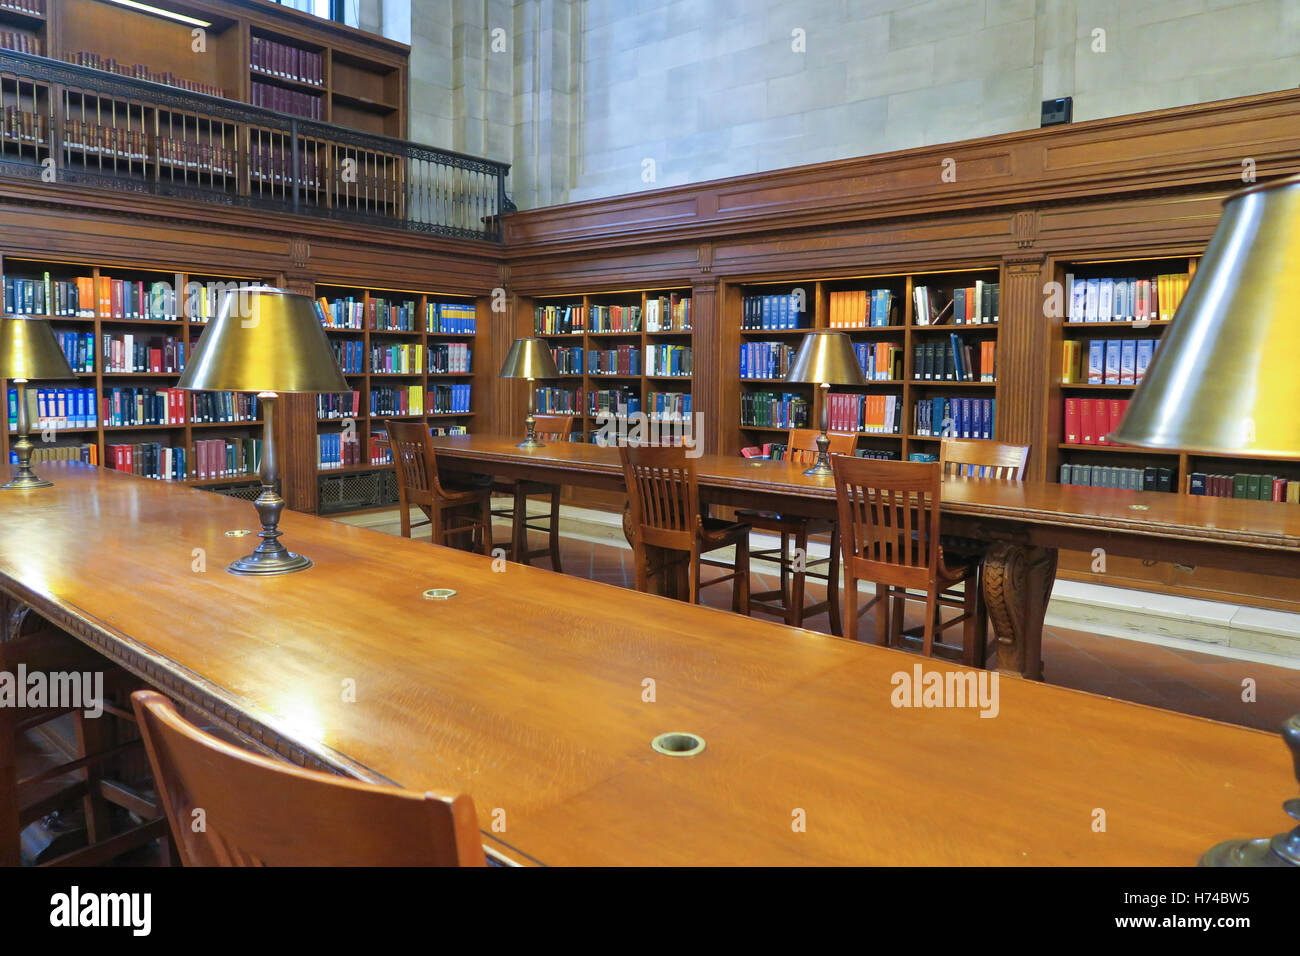 Bill Blass Public Catalog Room, New York Public Library, NYC Stock Photo